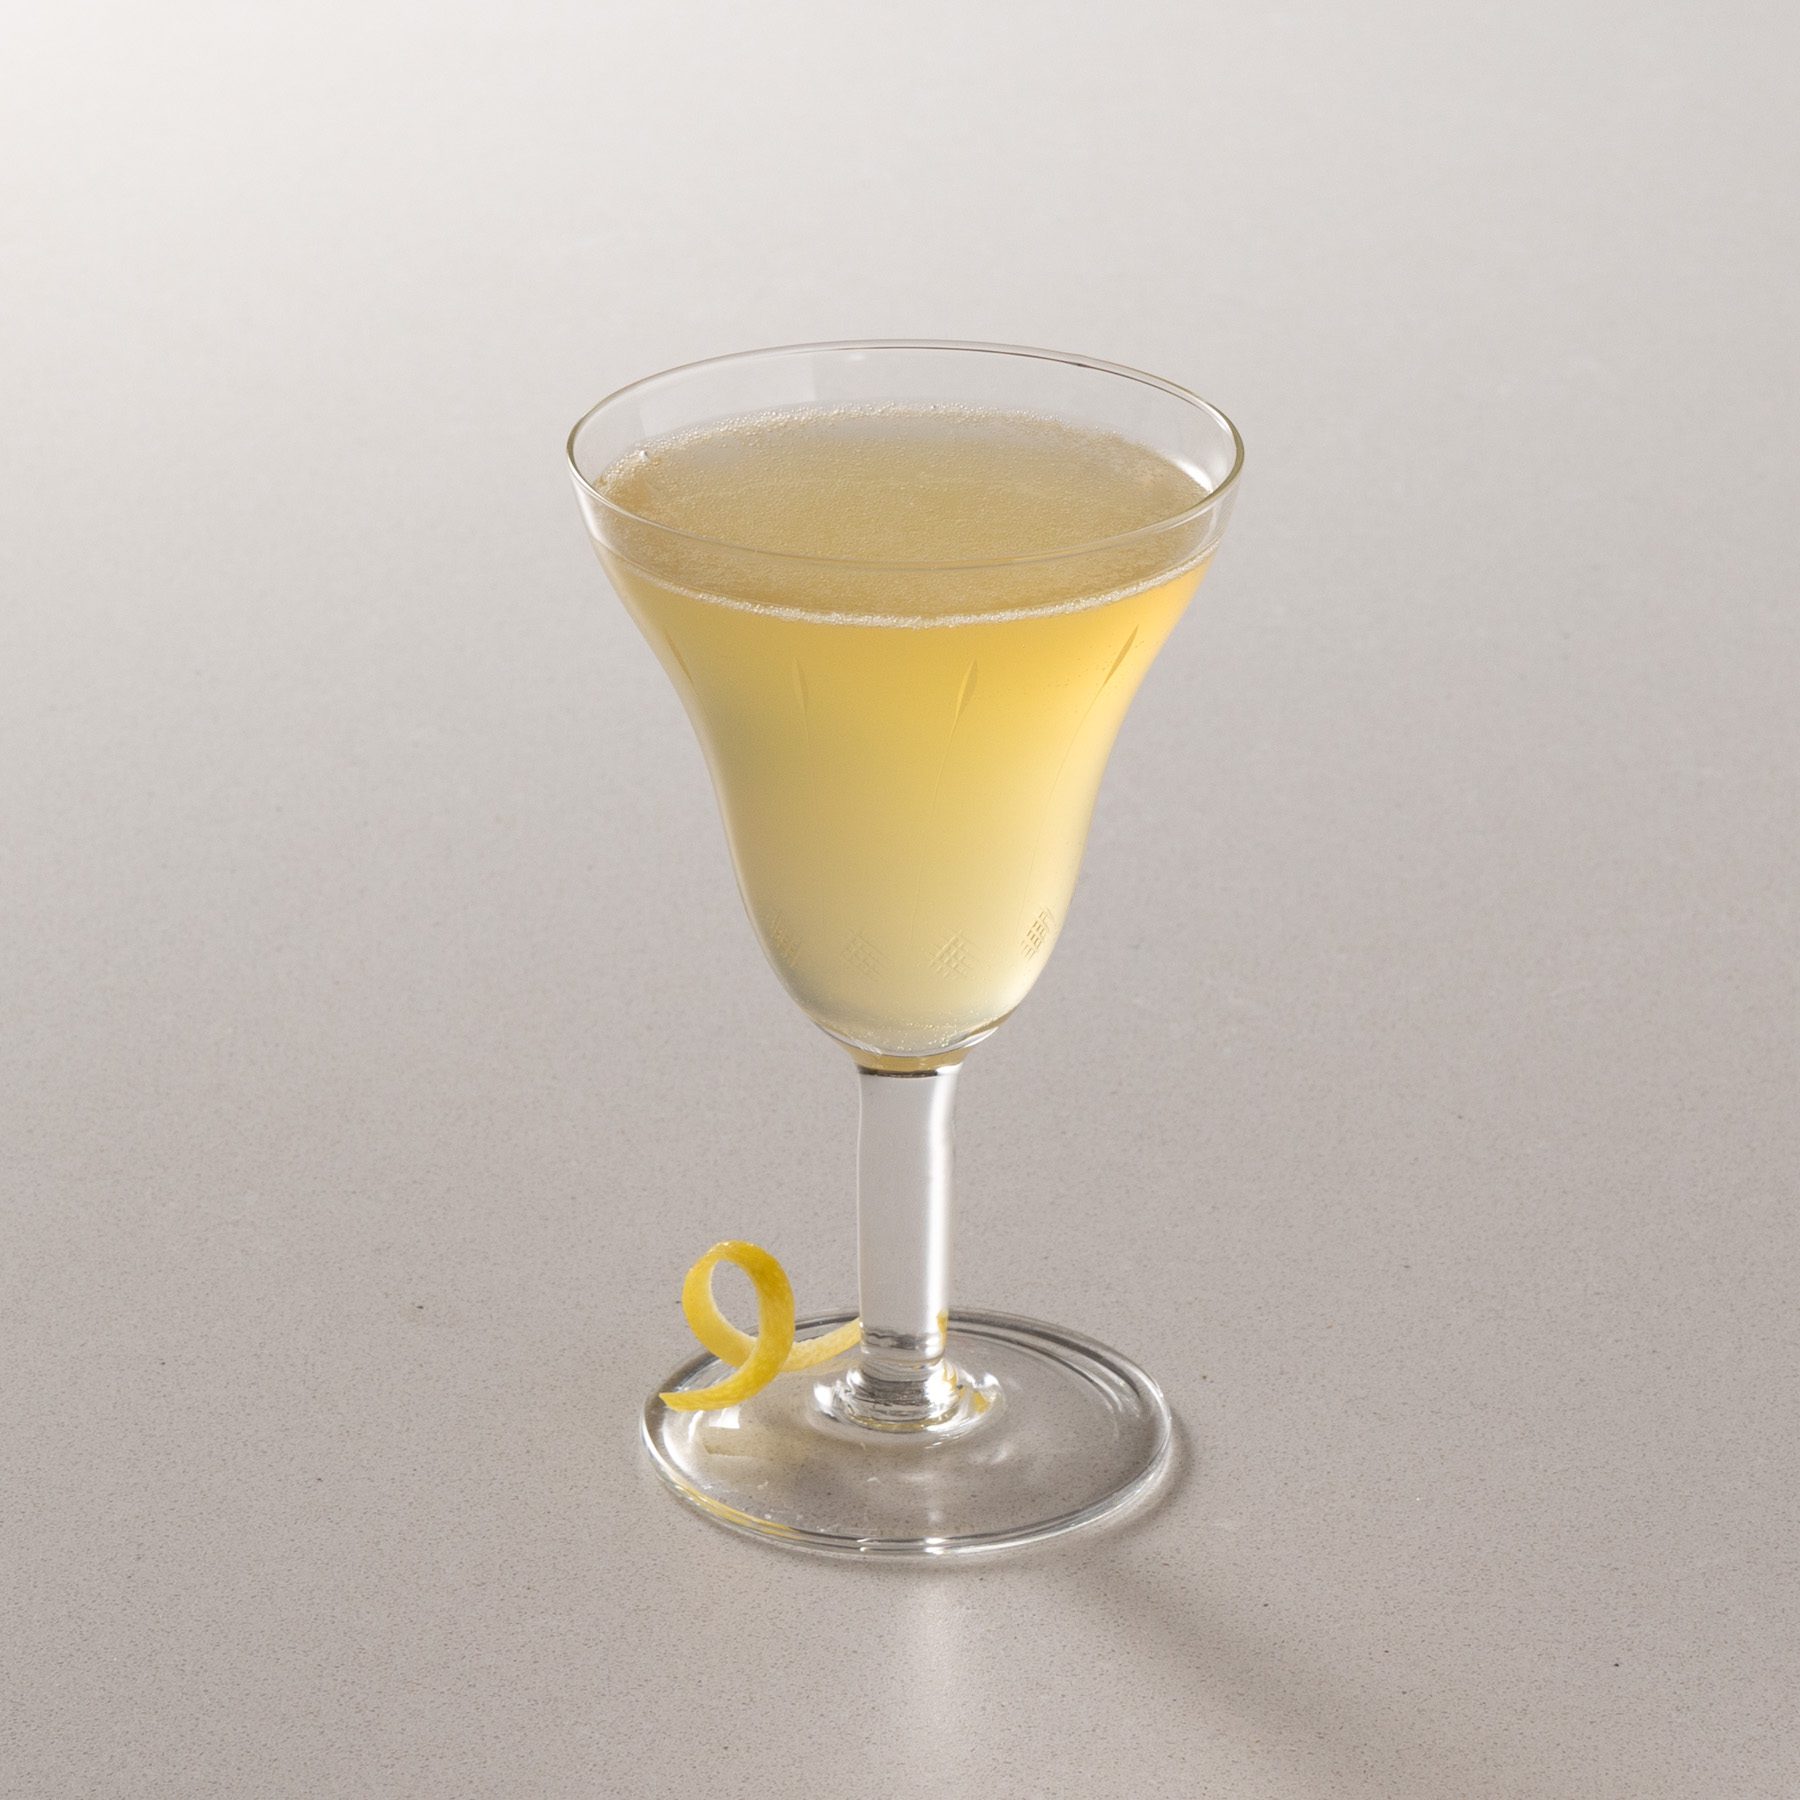 Brandy Daisy cocktail